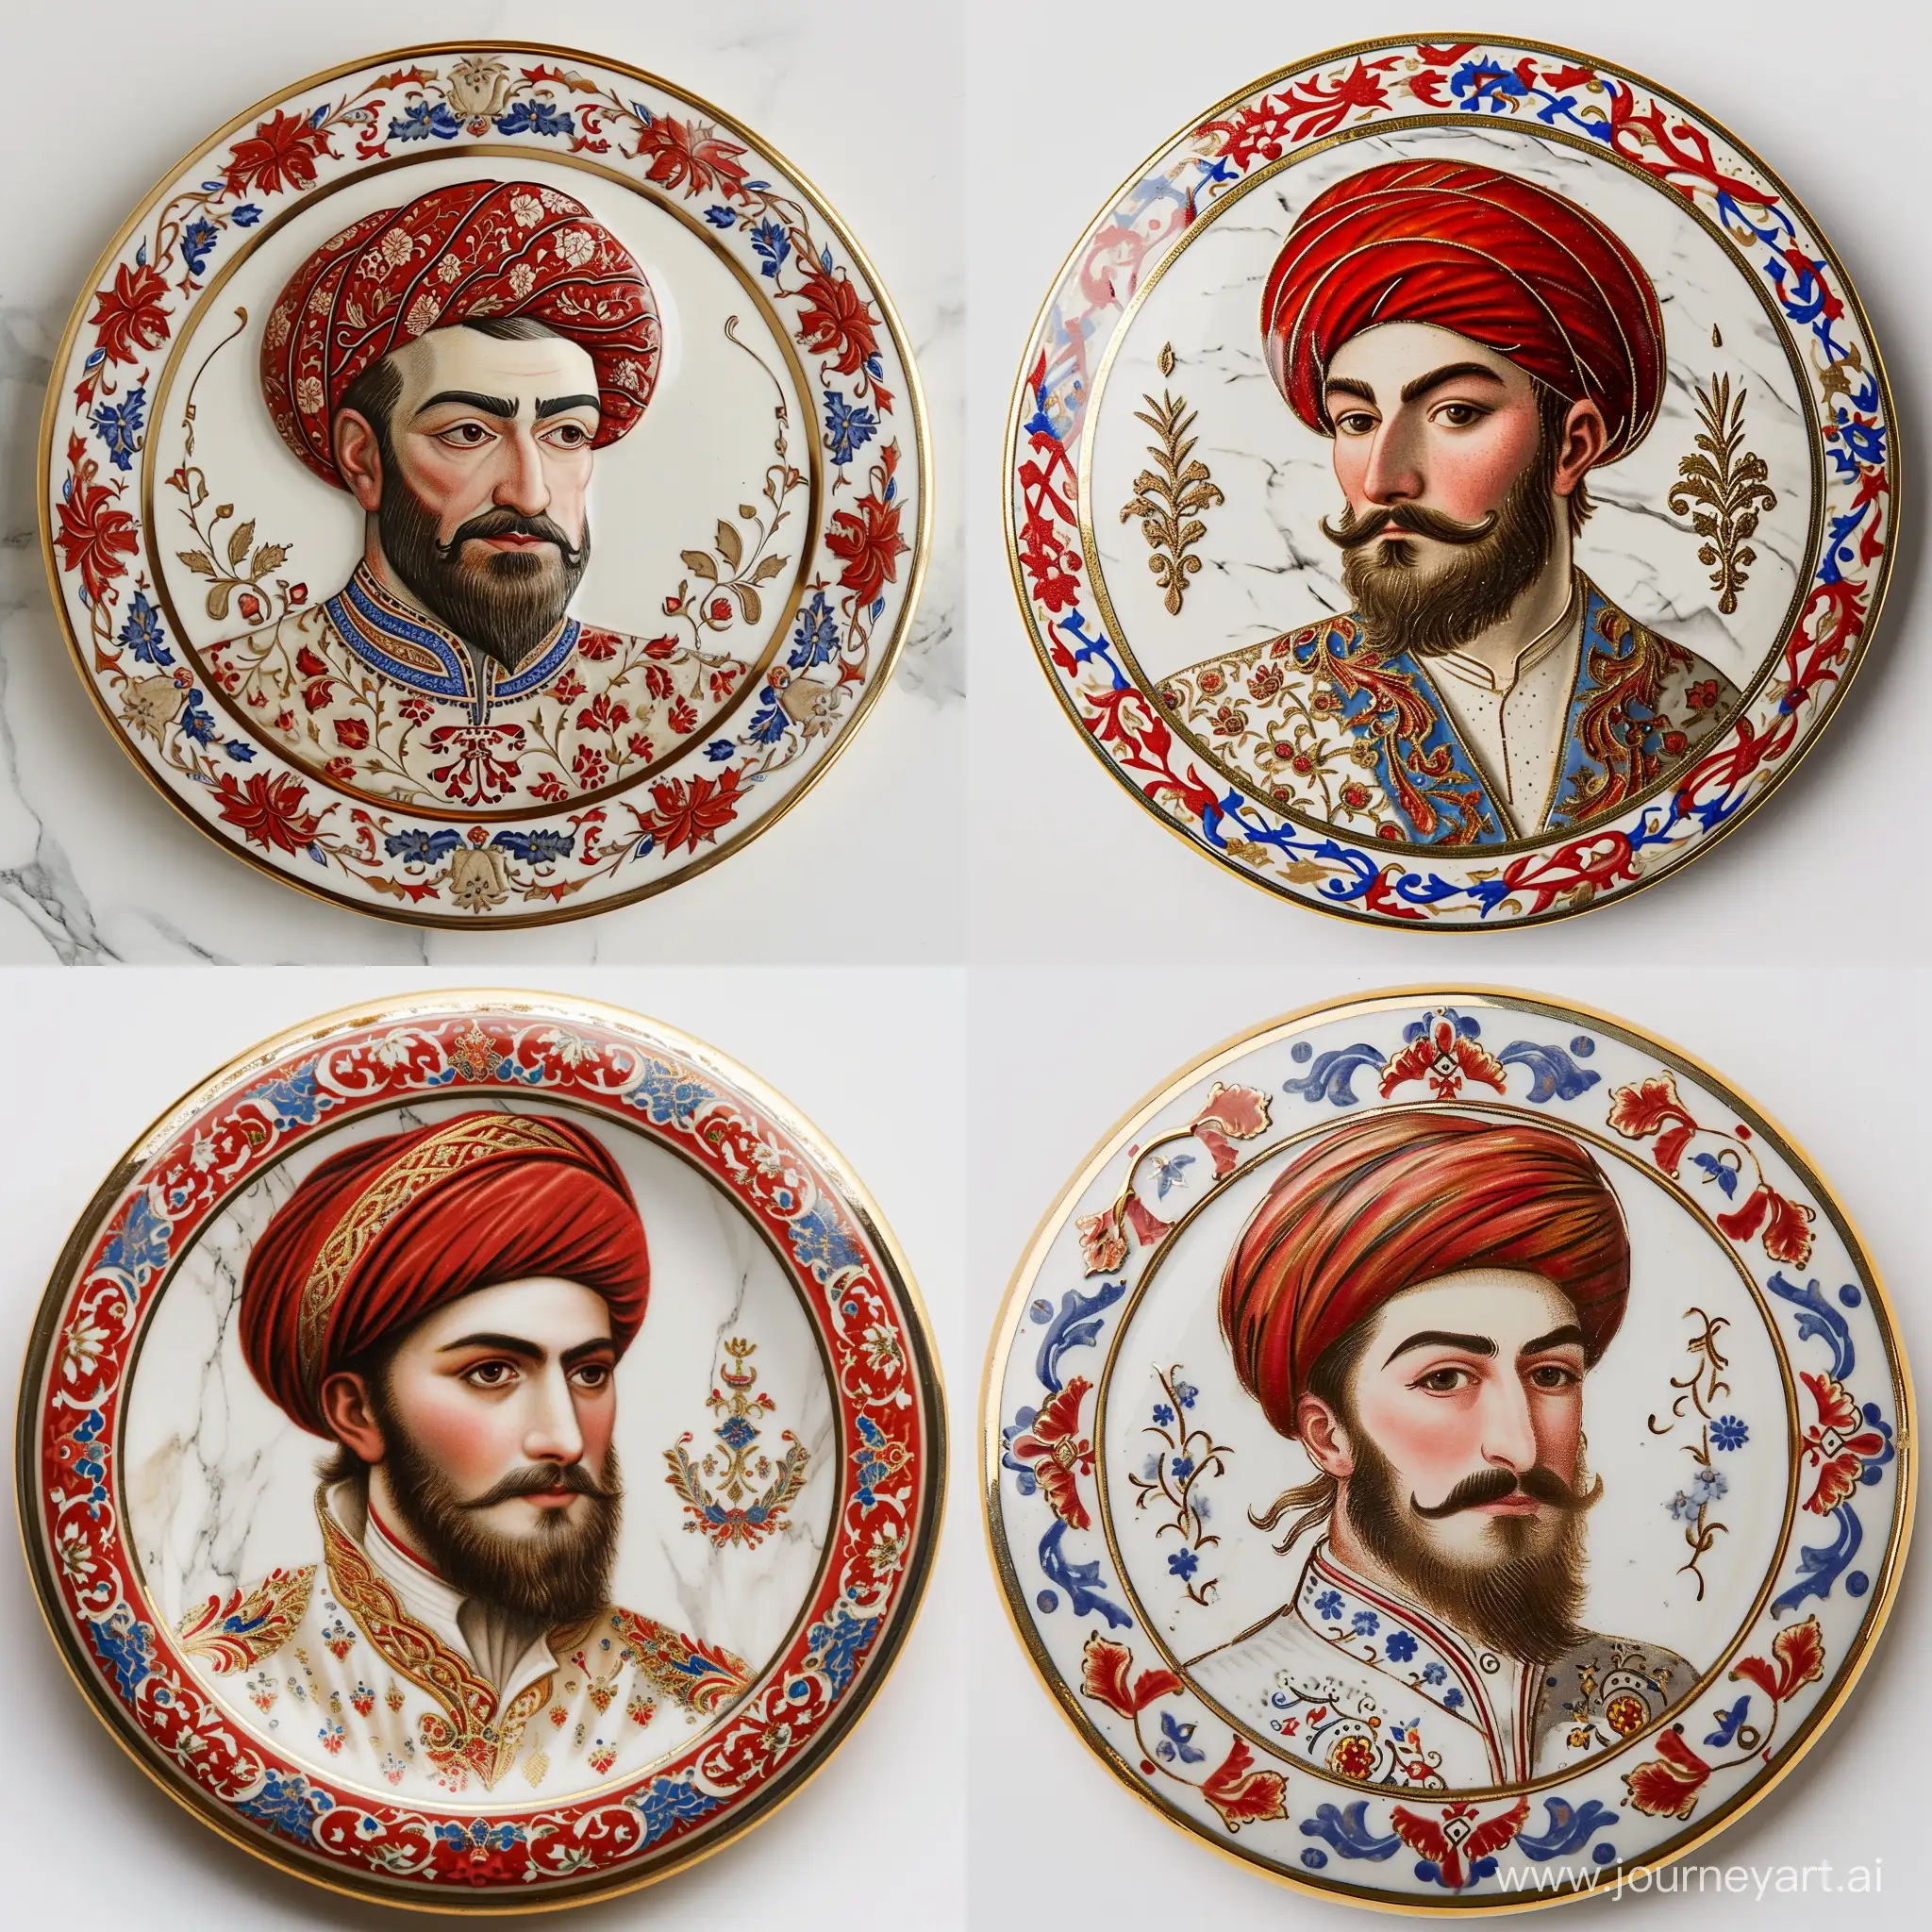 Safavid-Prince-Porcelain-Seal-with-Ottoman-Turban-and-Islamic-Dress